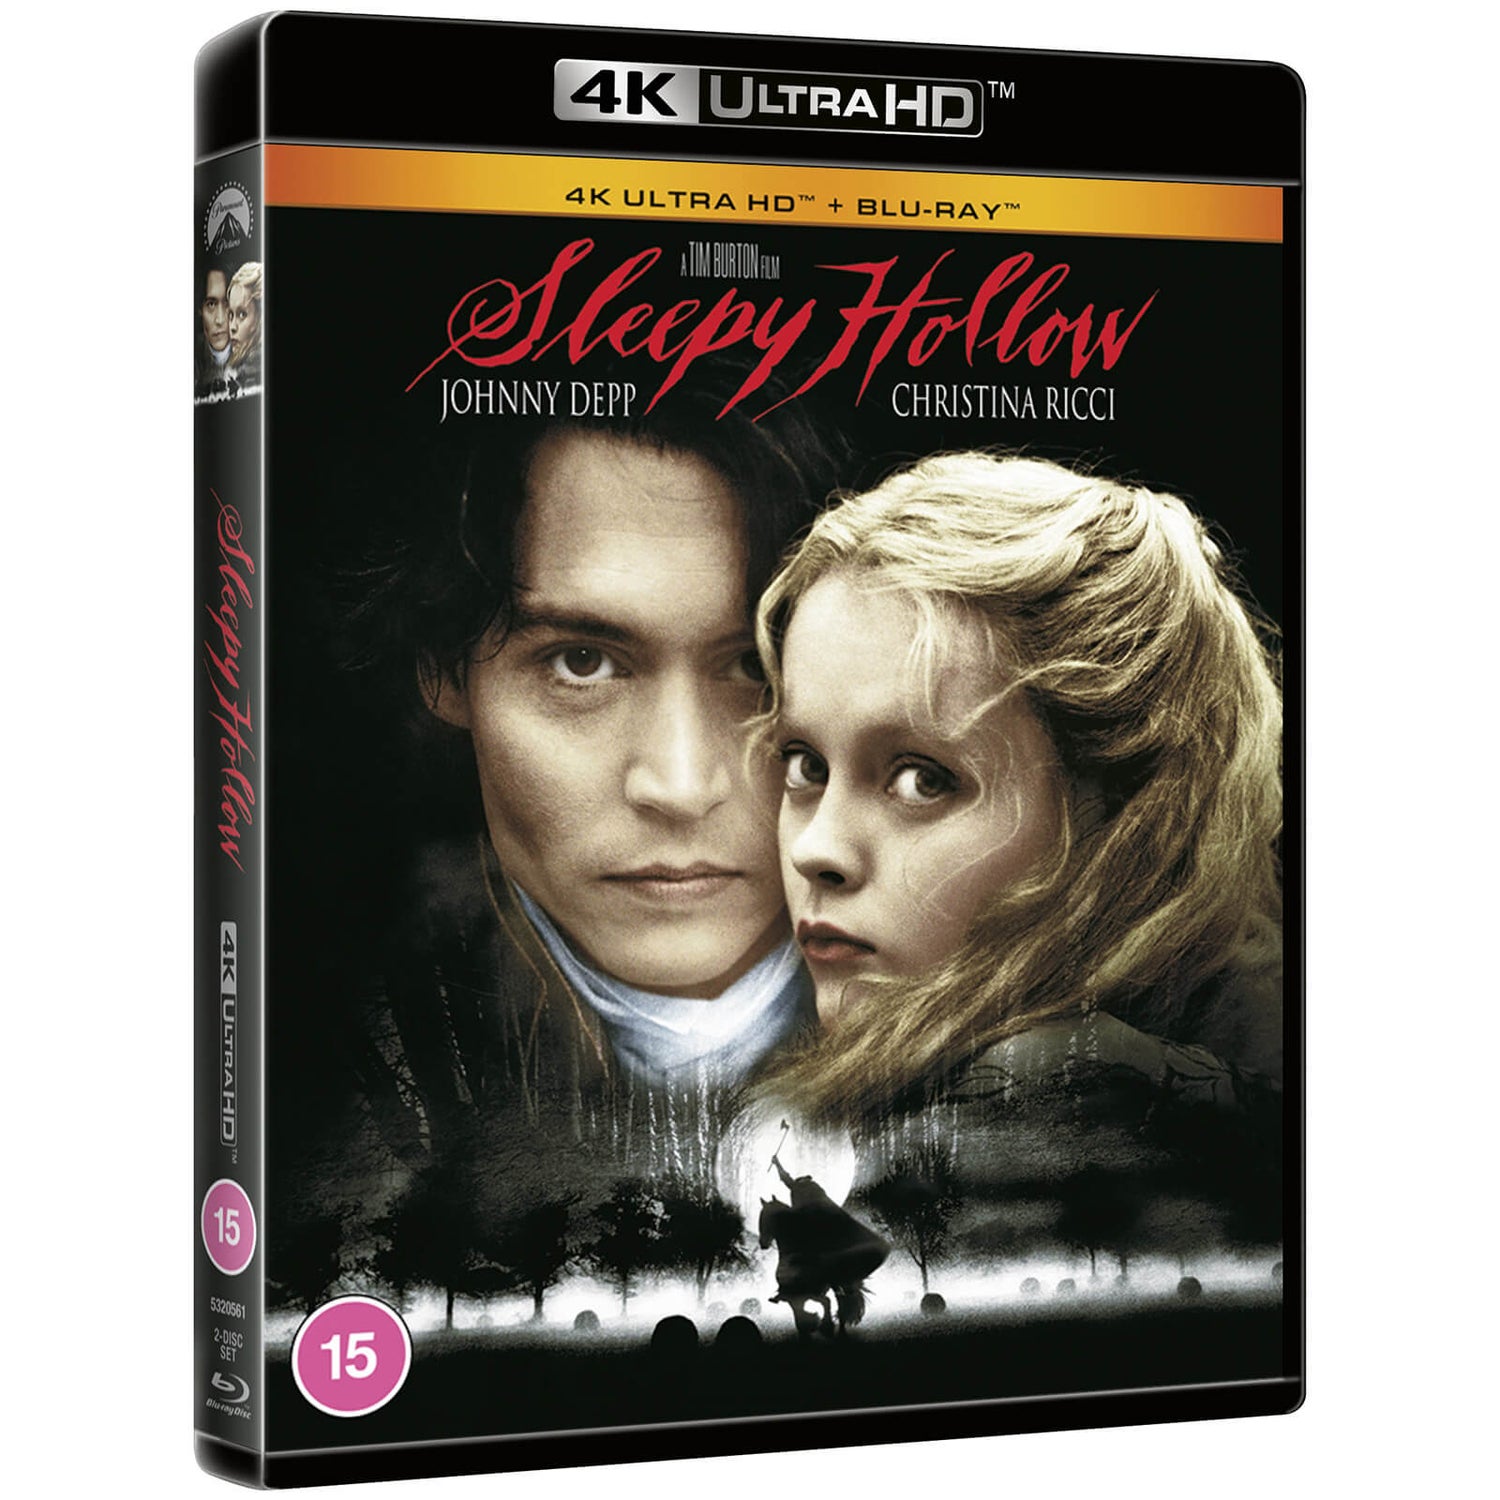 Sleepy Hollow 4K UItra HD (includes Blu-ray)